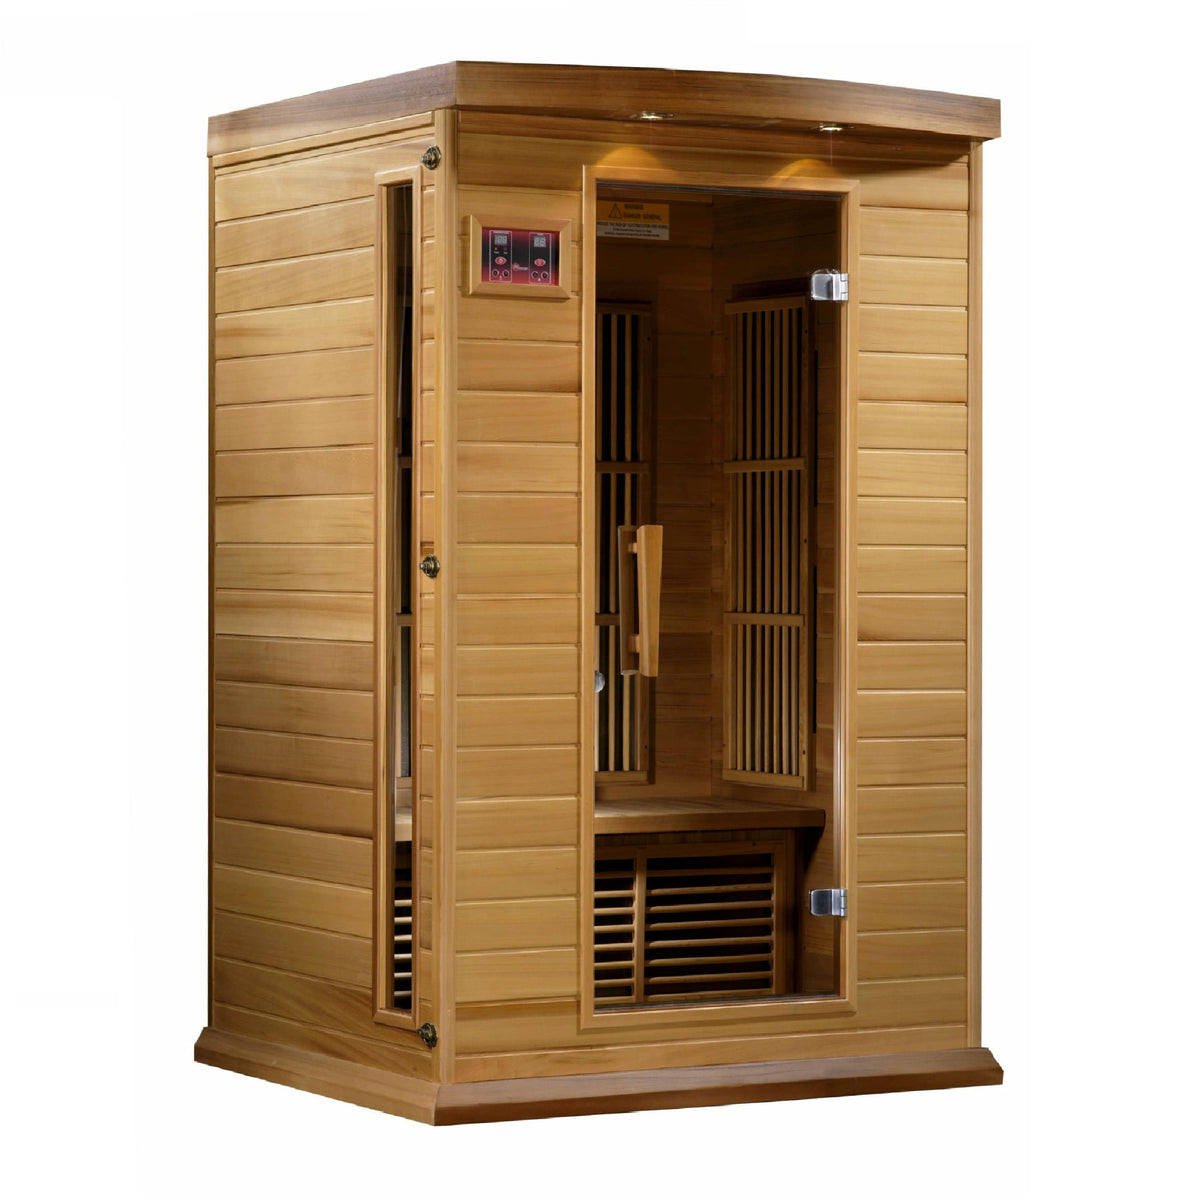 Golden Designs Maxxus 2-Person FAR Infrared Sauna - Low EMF with Canadian Red Cedar | MX-K206-01 CED